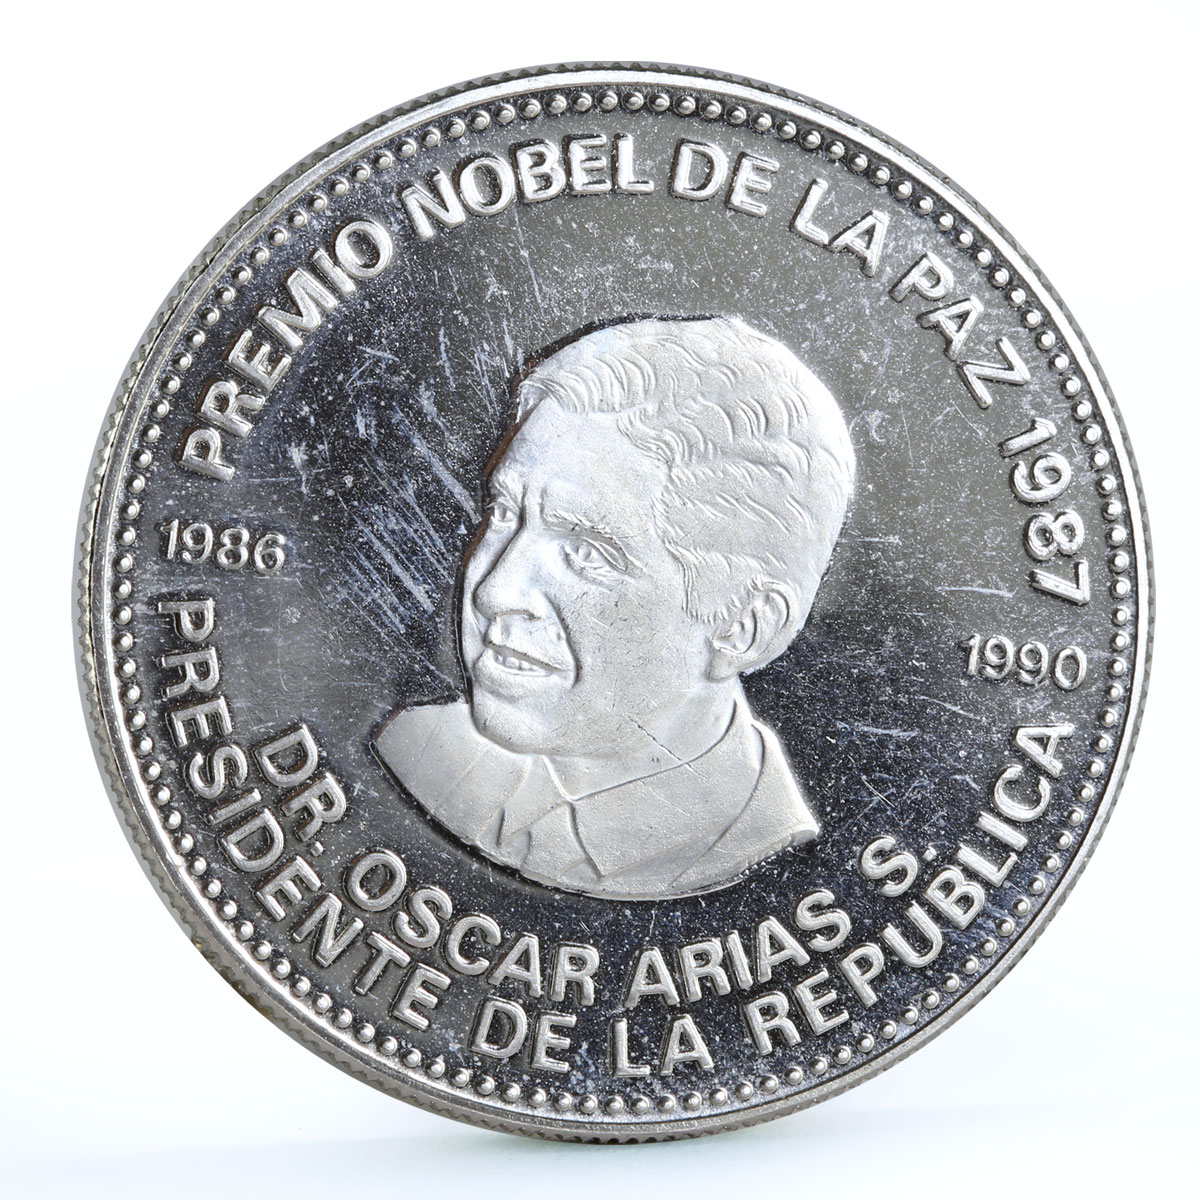 Costa Rica 100 colones President Oscar Arias Nobel Peace Prize nickel coin 1987